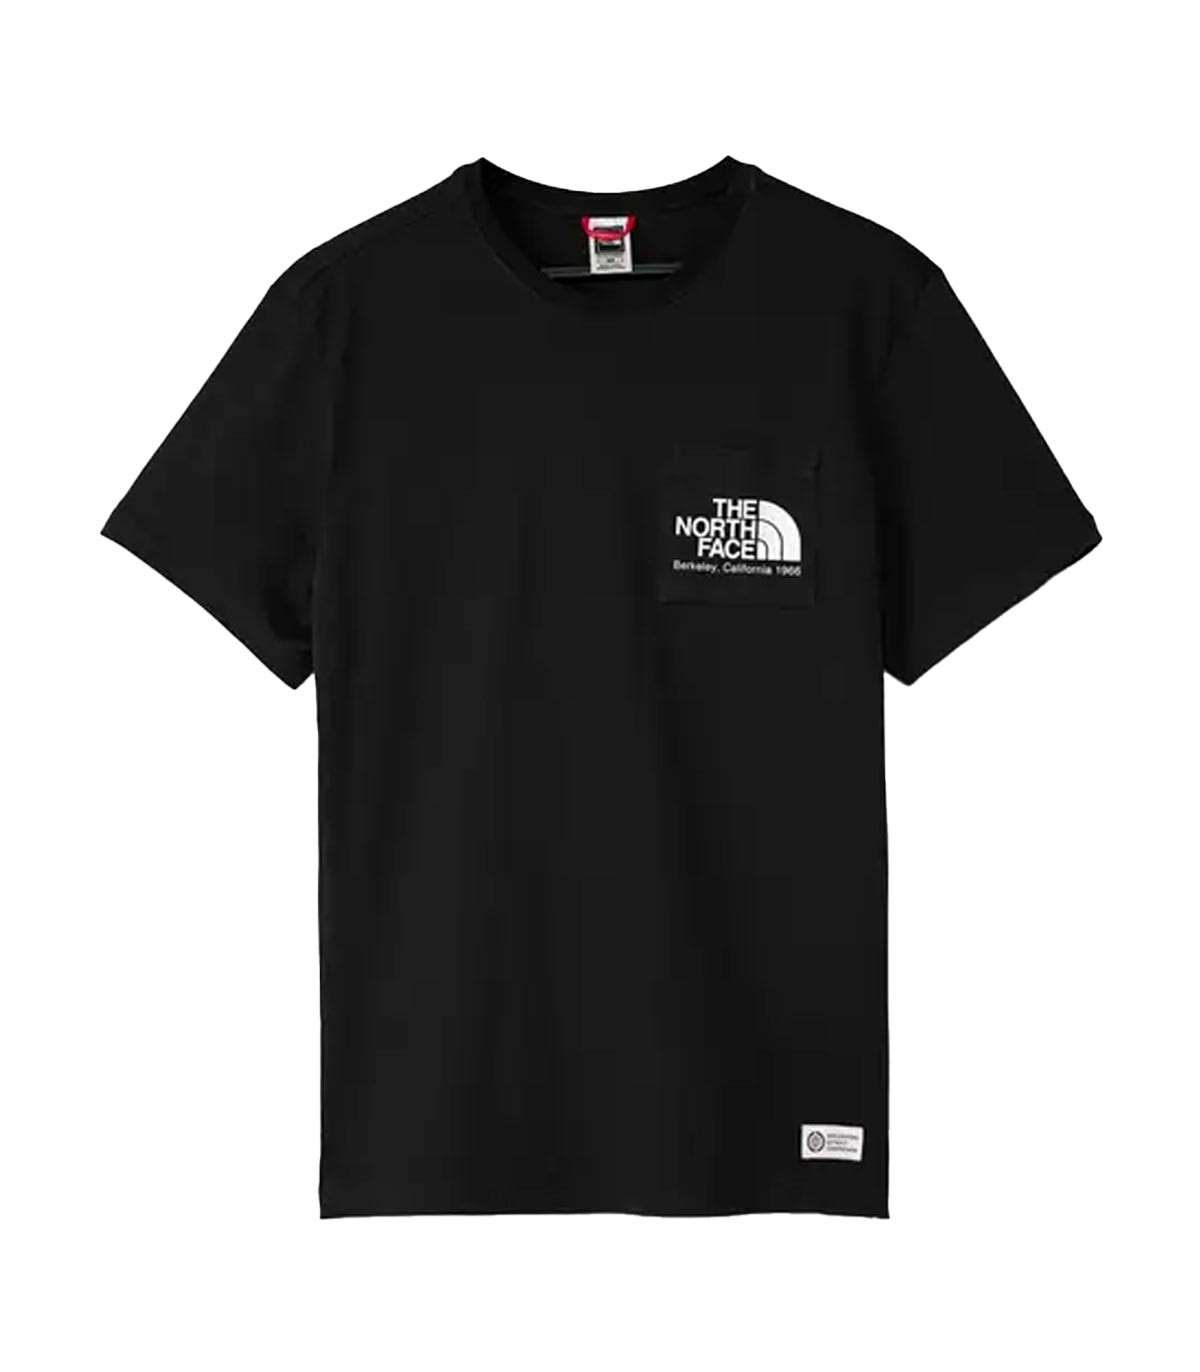 The North Face - Camiseta Berkeley California - Negro